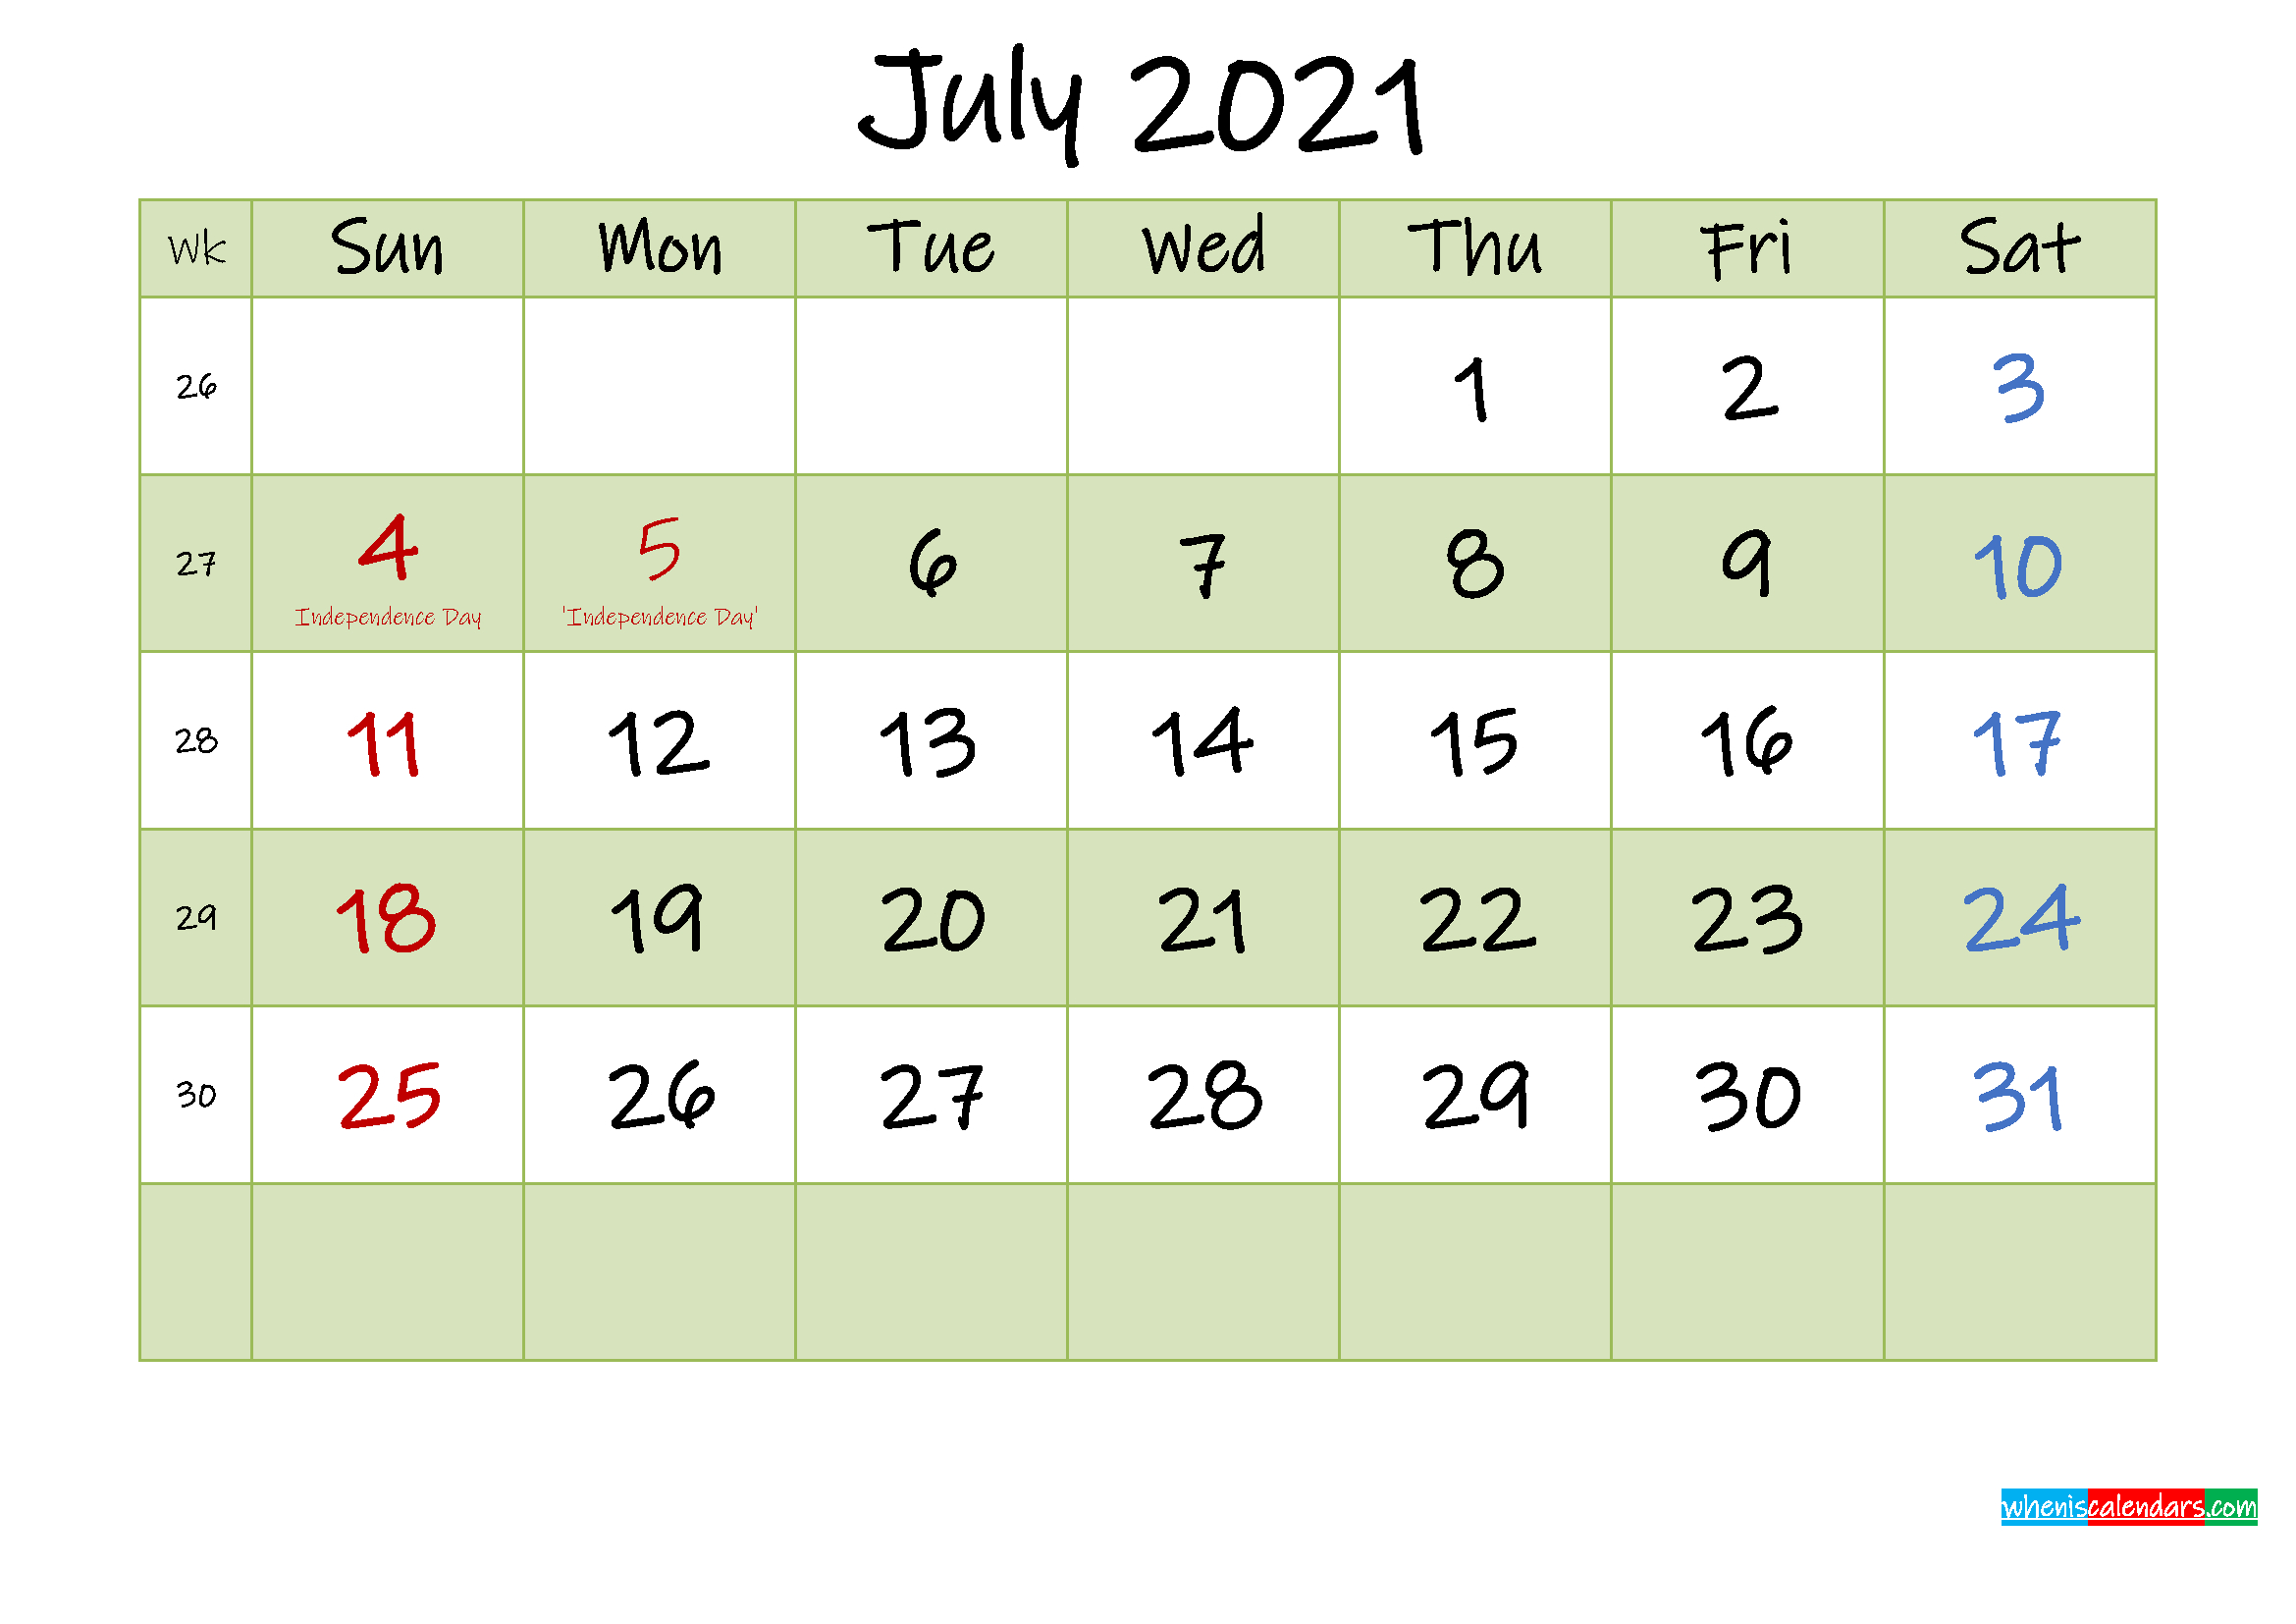 July 2021 Calendar With Holidays Printable - Template No-July 2021 Starfall Calendars